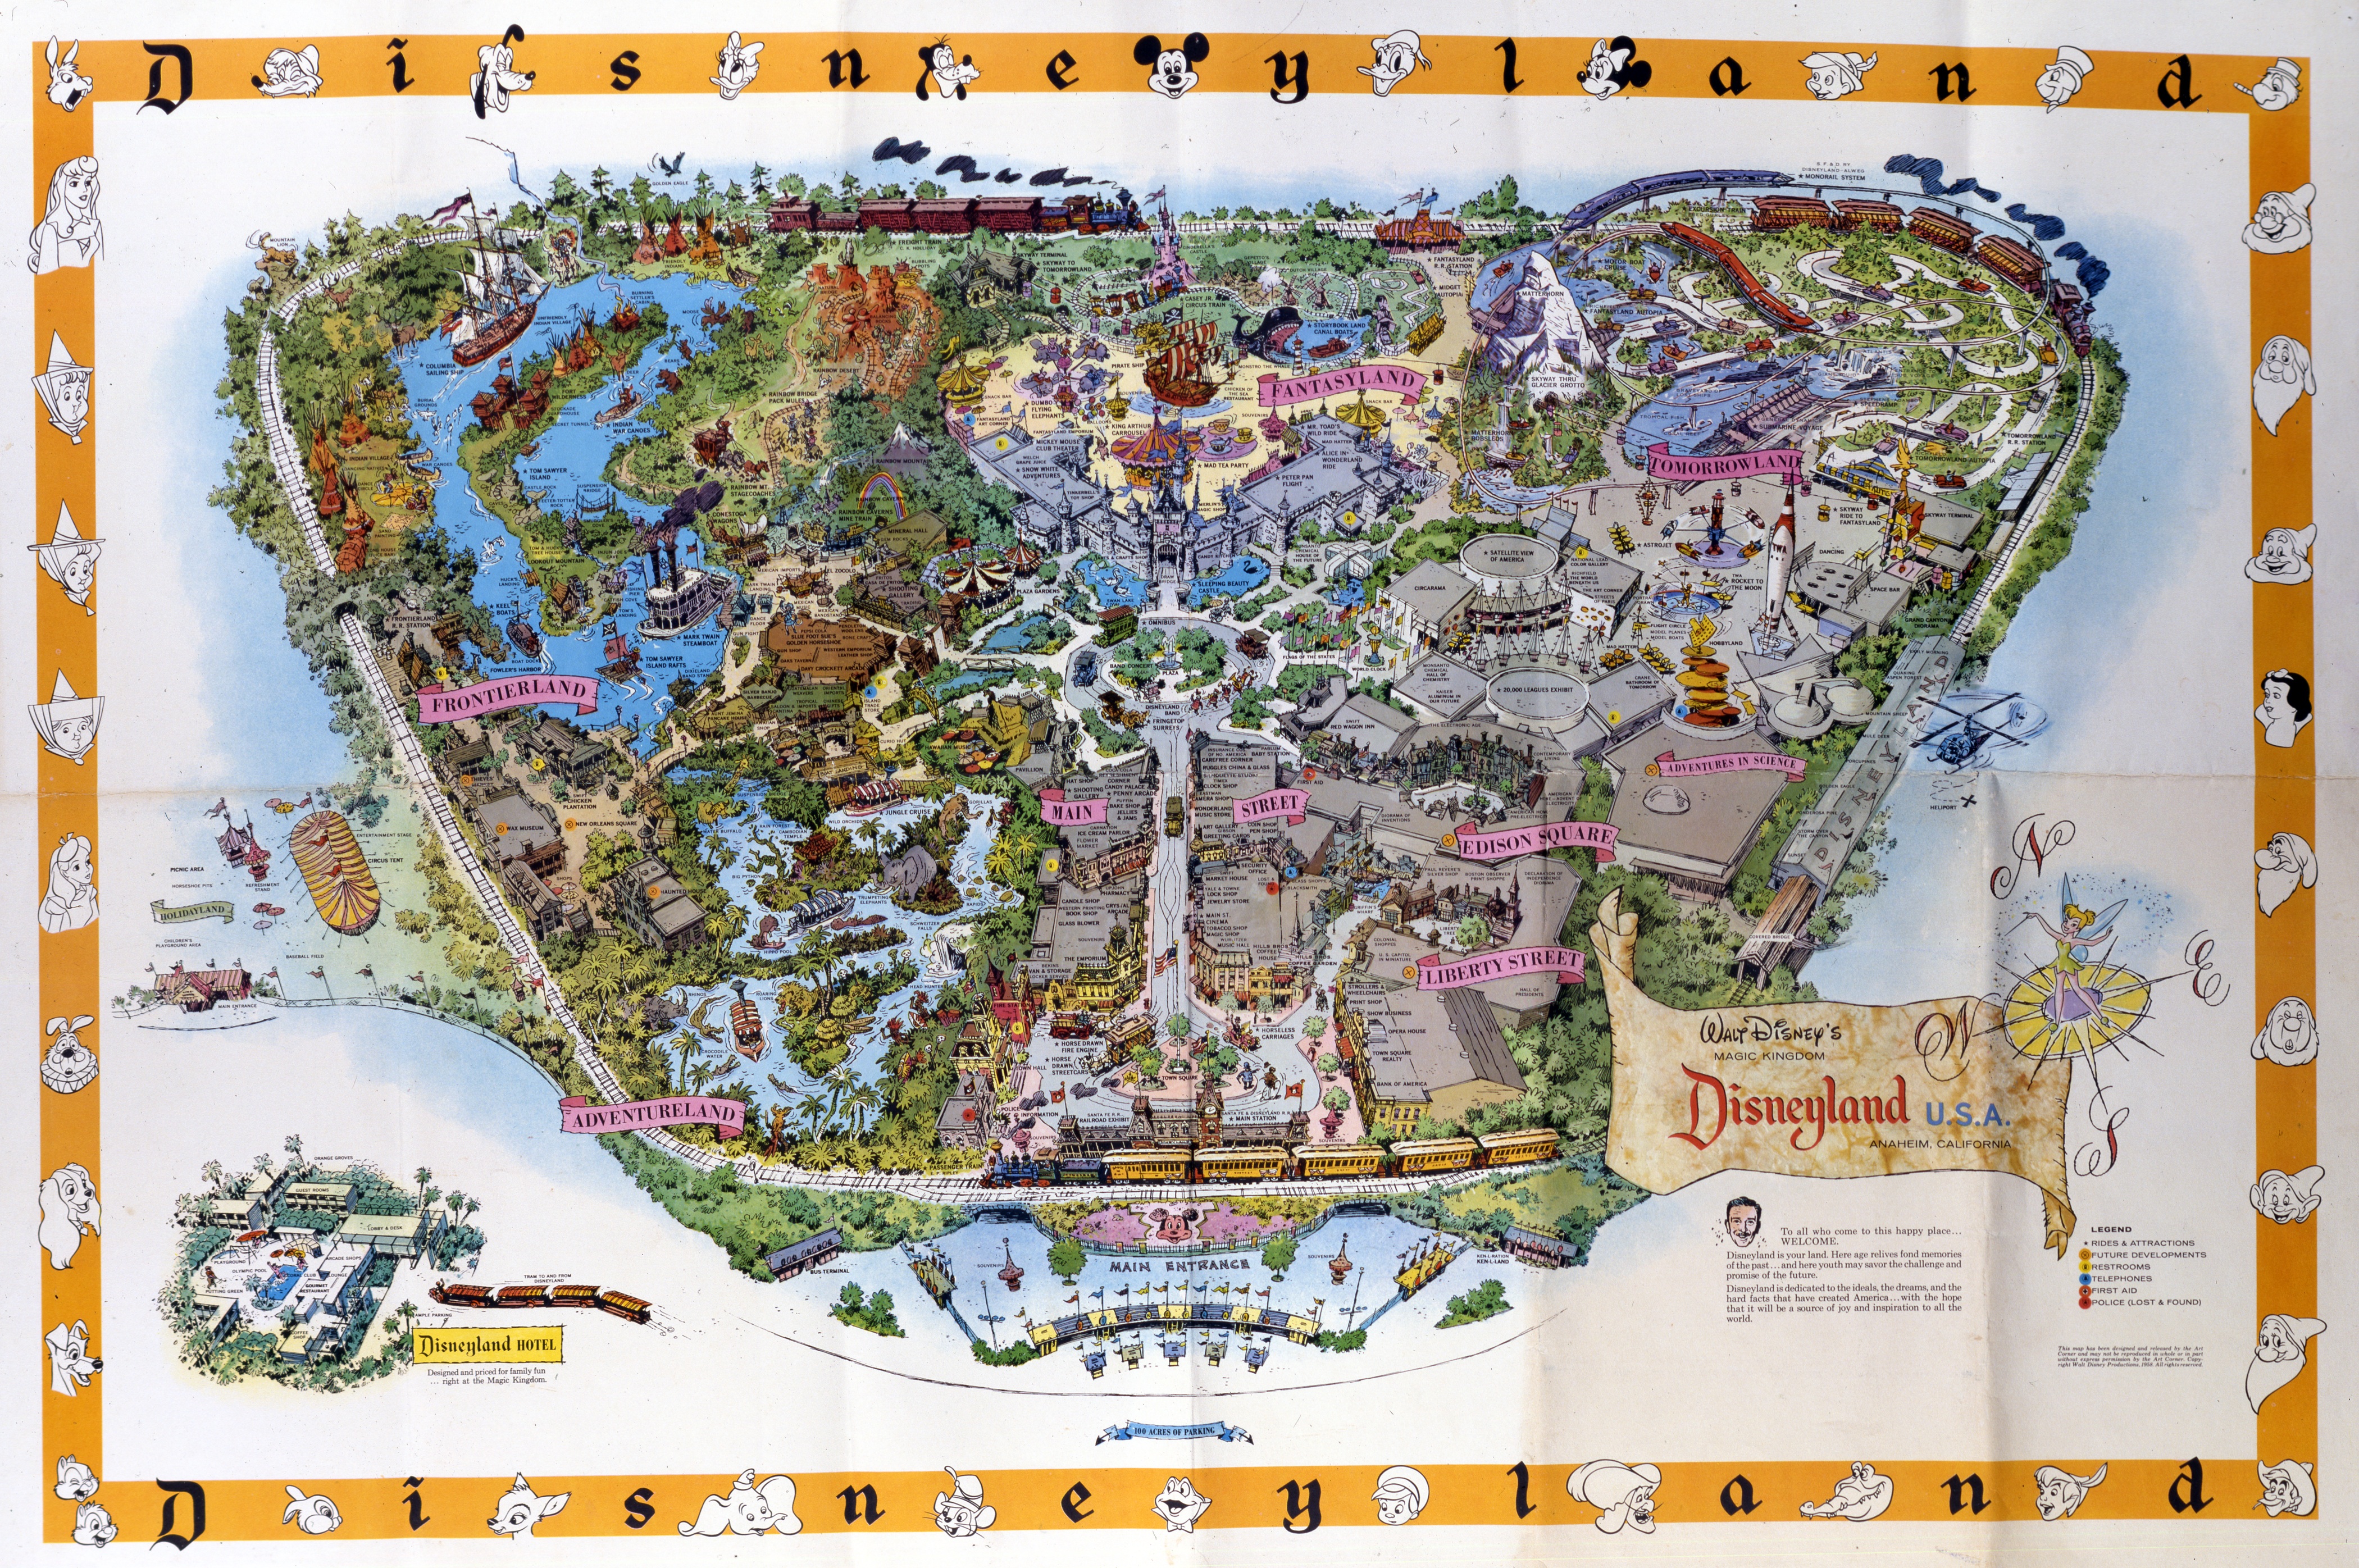 Disneyland S Evolution Through Maps Kcrw